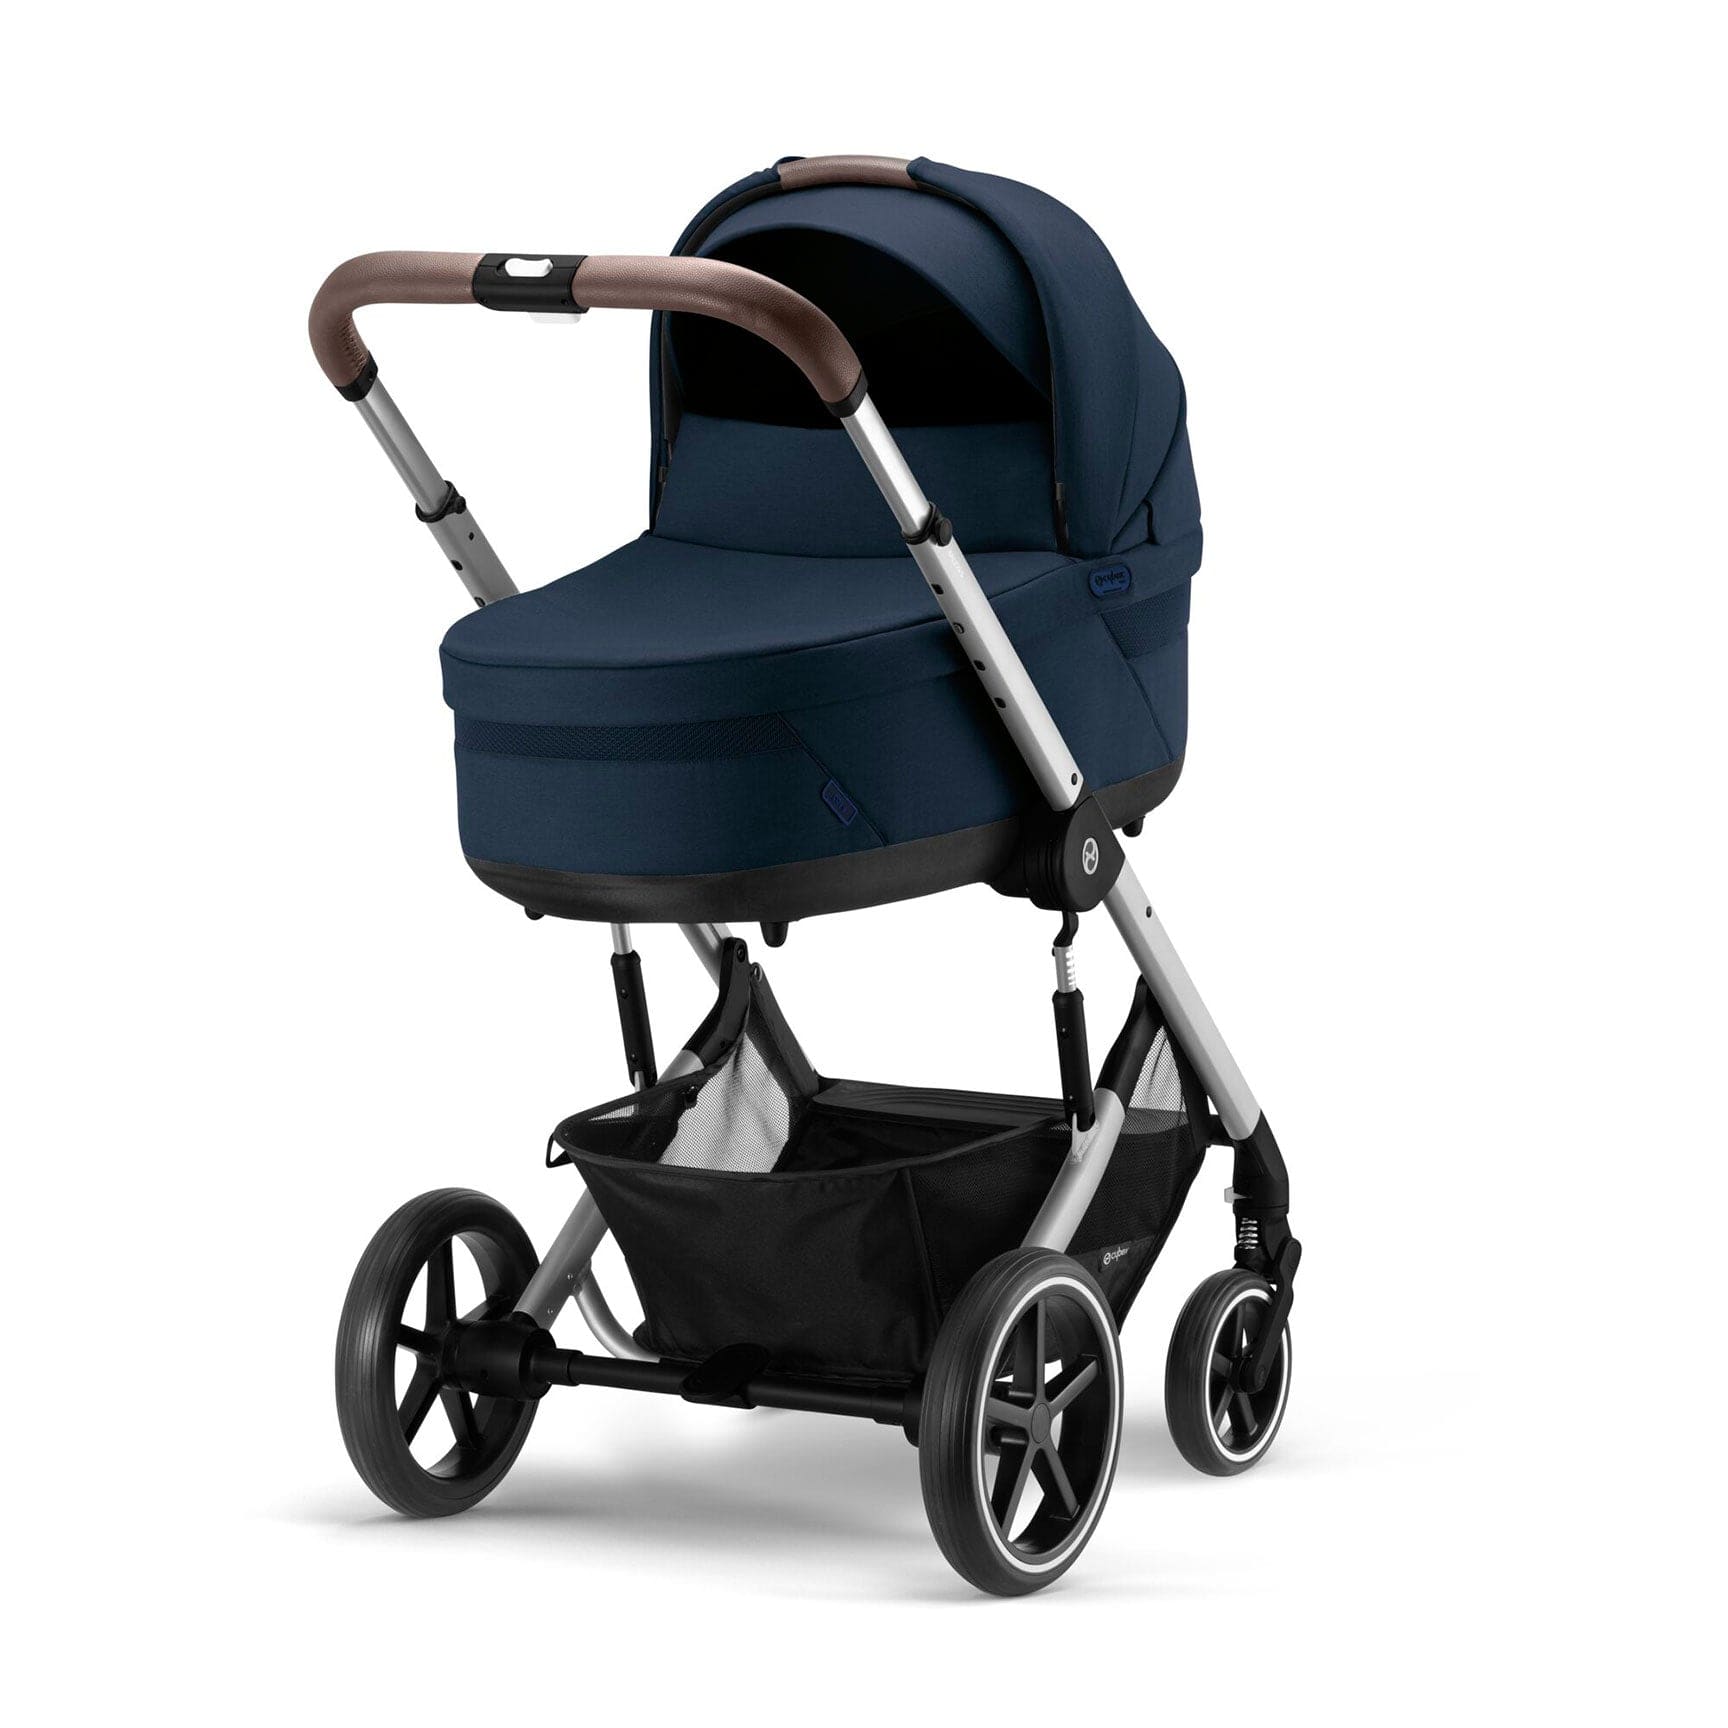 Cybex Baby Strollers Cybex Balios S Lux Essential Bundle - Silver/Ocean Blue 12744-SLV-OCE-BLU